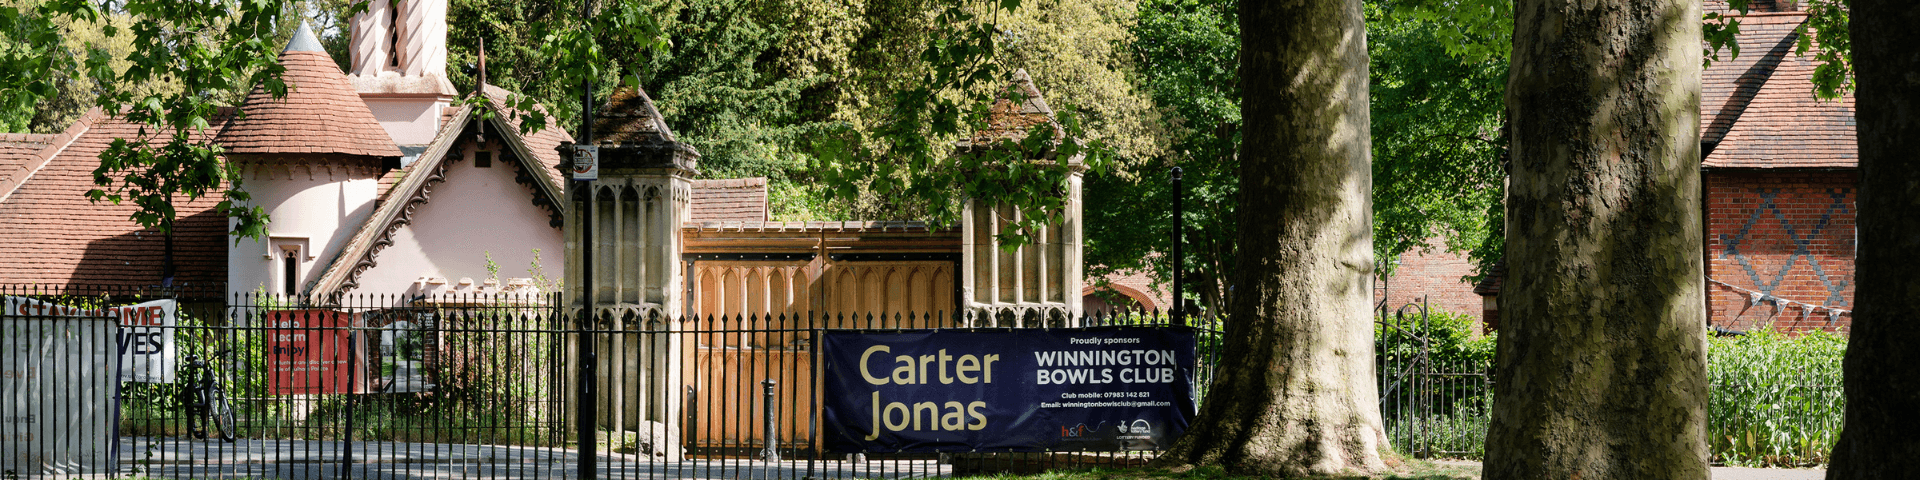 Carter Jonas Fulham office, hero image 2024